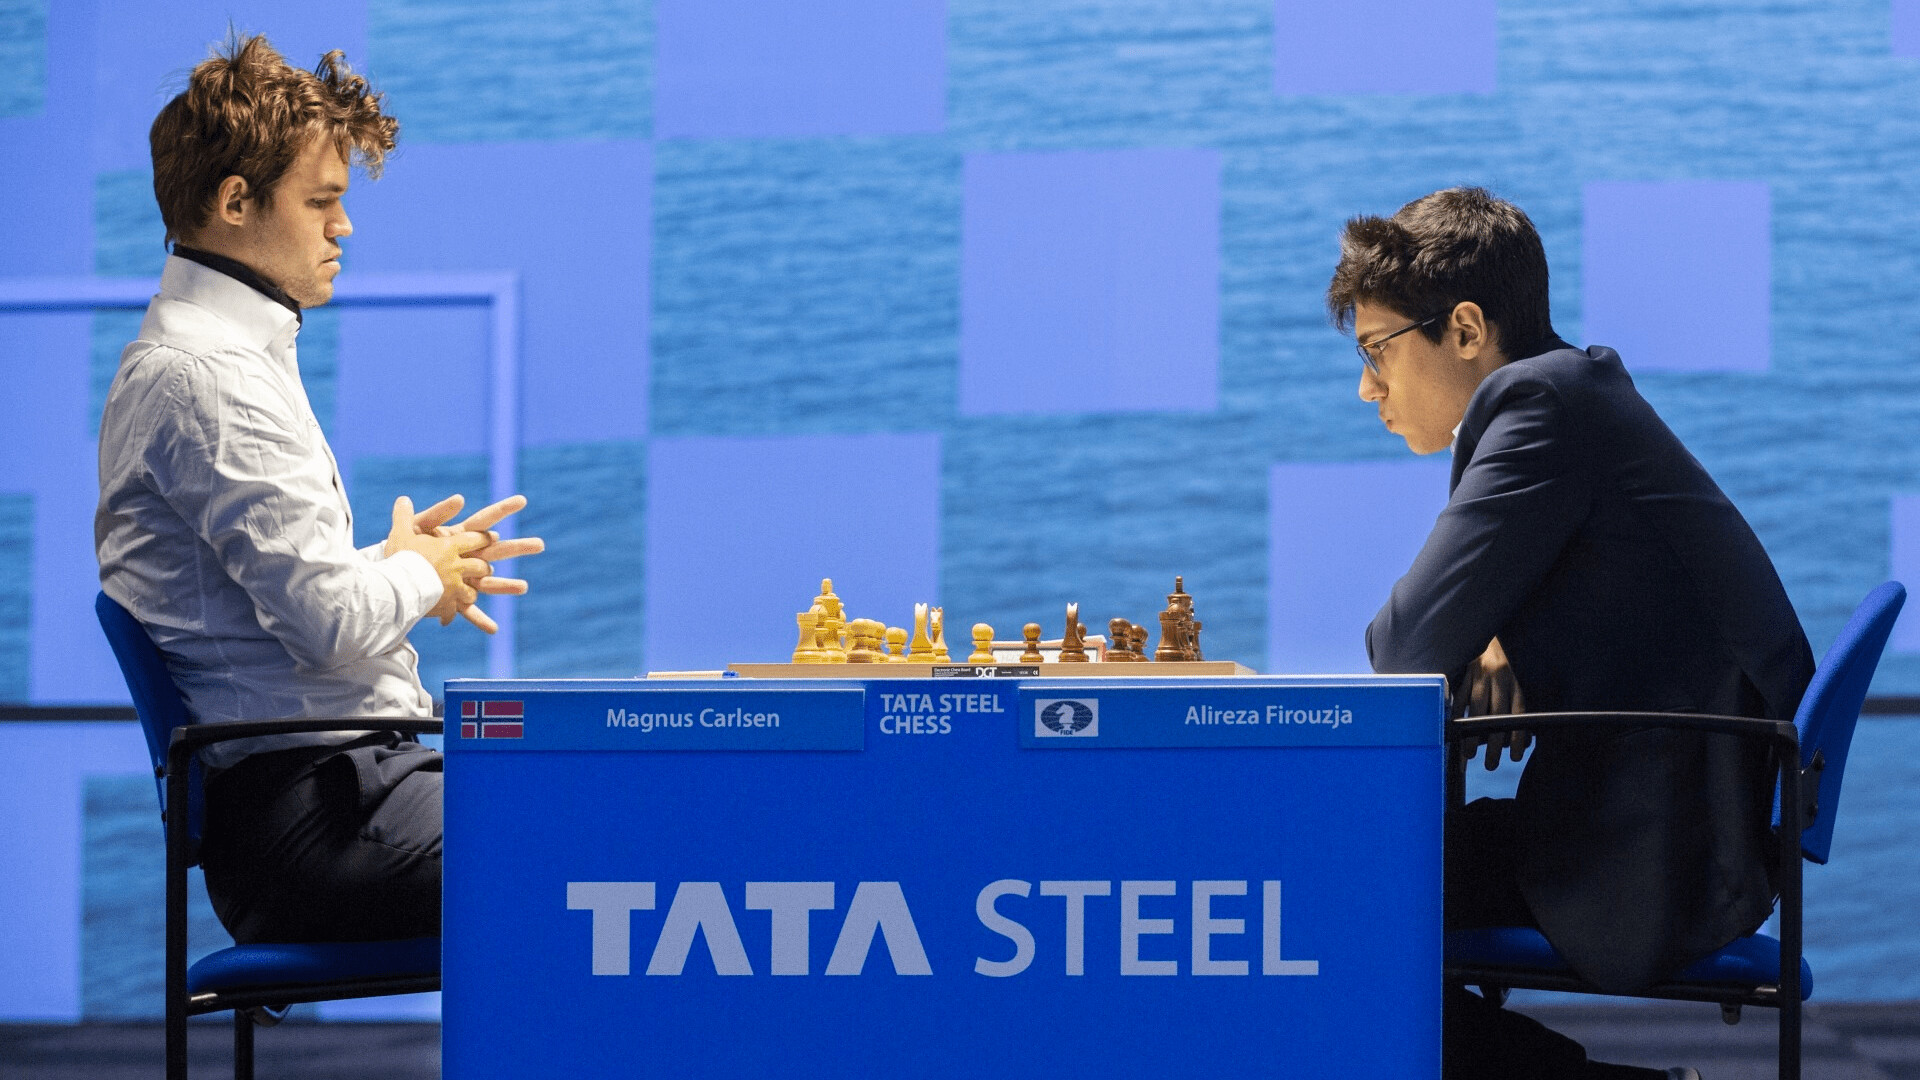 Magnus Carlsen: Tata Steel Chess 2021, Won the London Chess Classic in December 2011. 1920x1080 Full HD Wallpaper.